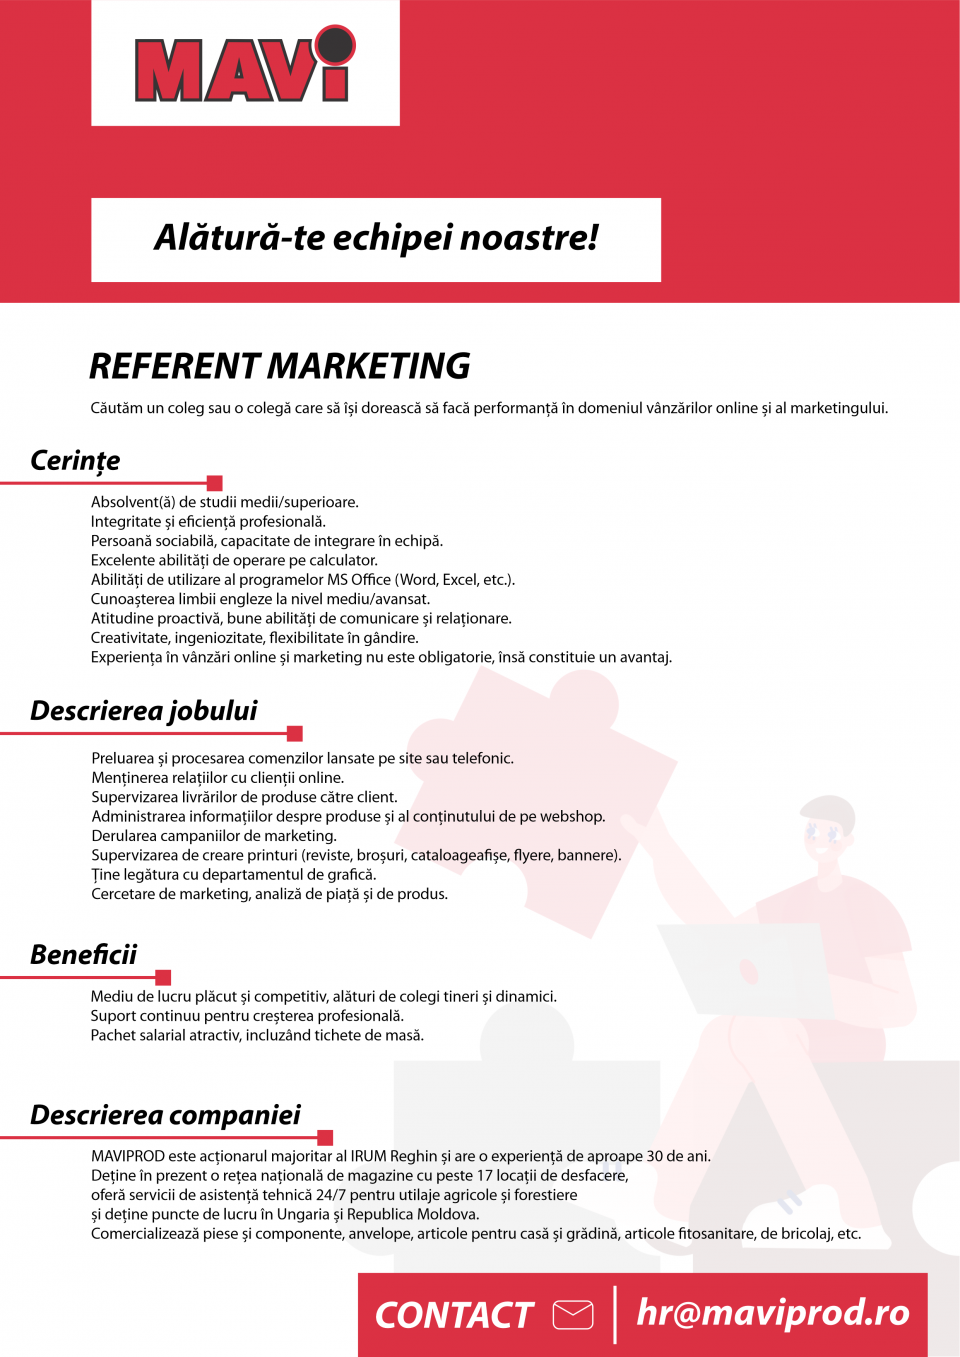 Referent marketing - Reghin